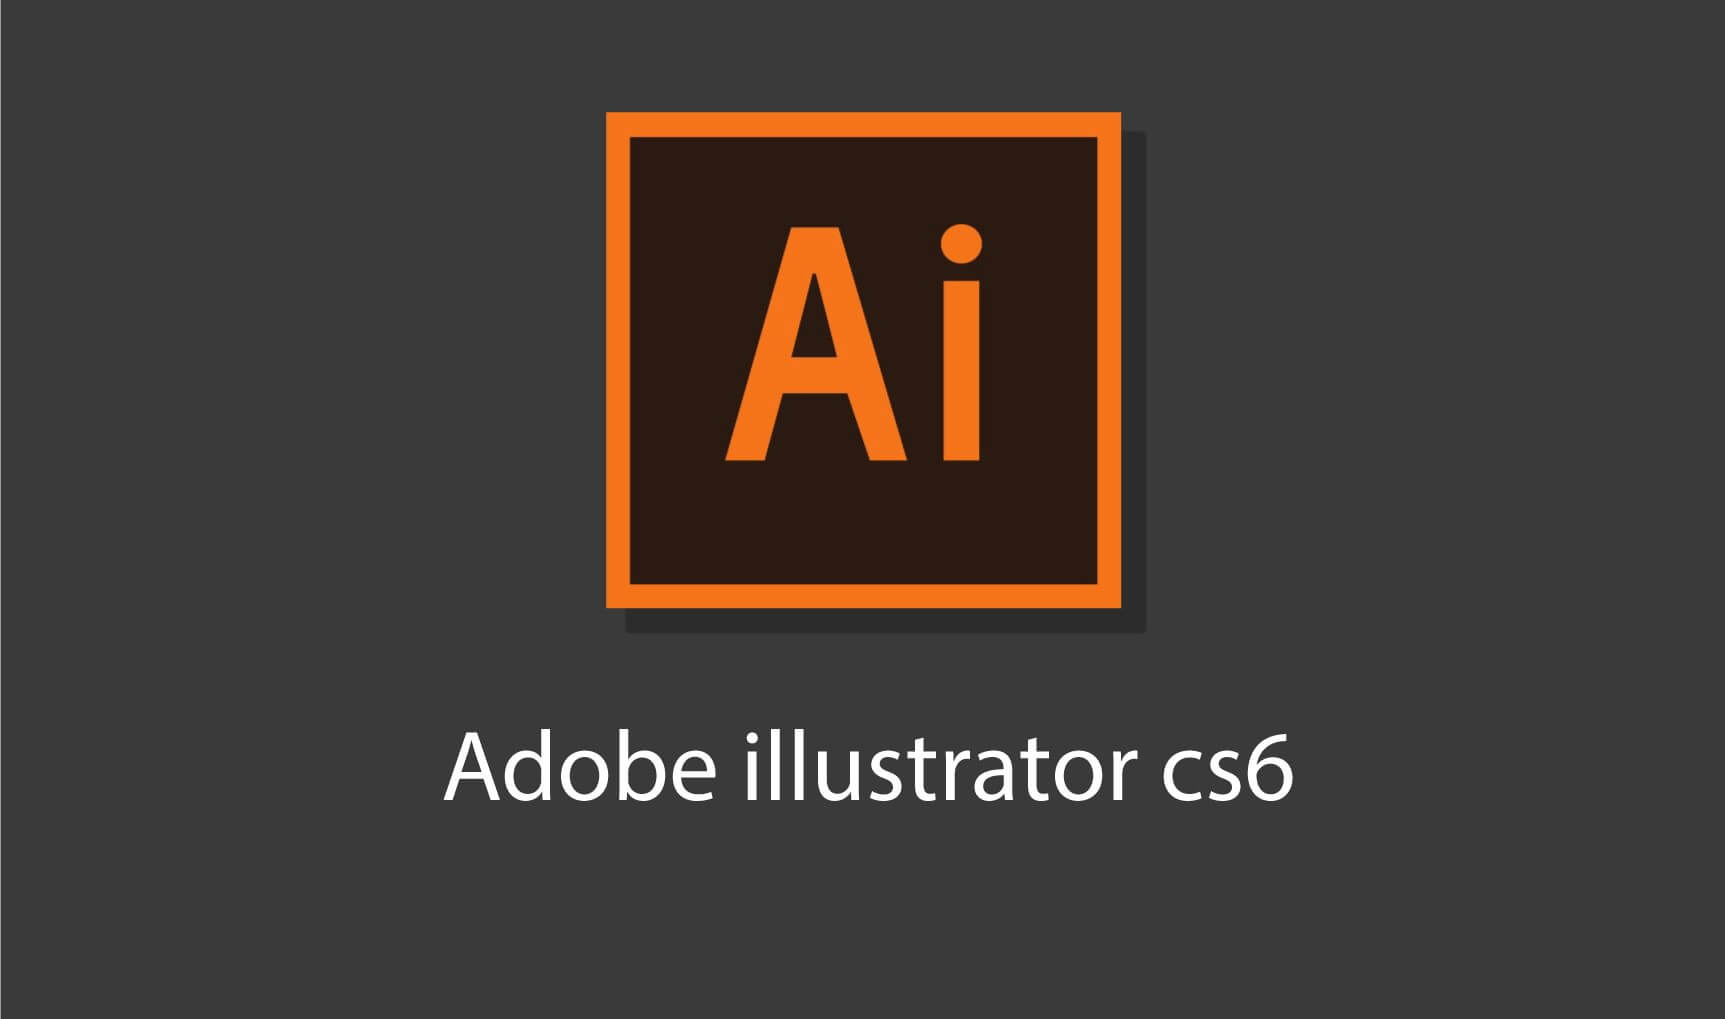 Adobe Illustrator Cs6 Free Download With Full Version